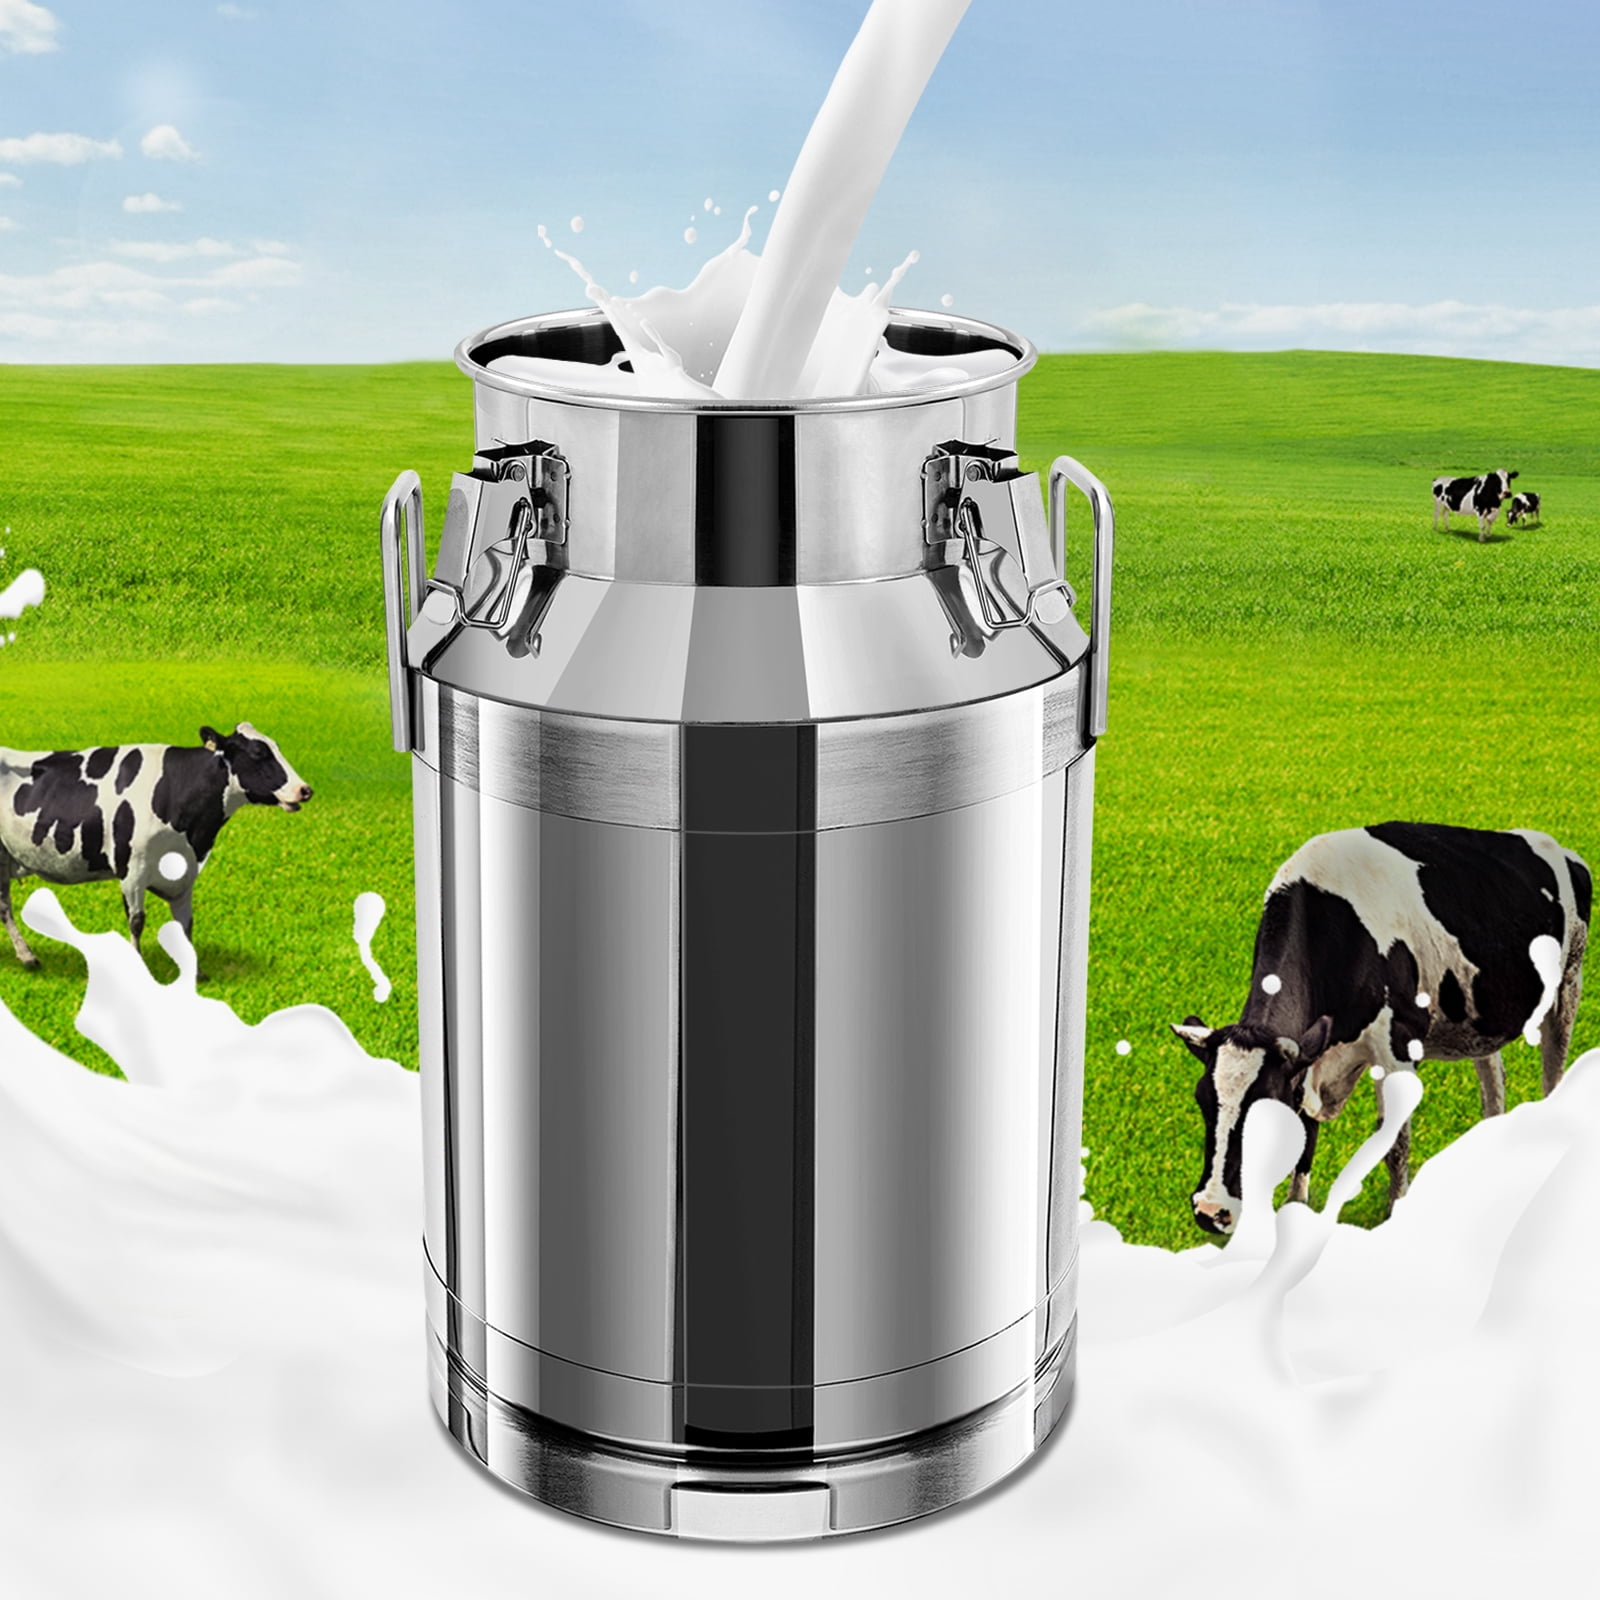 40L Milk Bucket, Heavy Duty Stainless Steel Large Capacity Milk